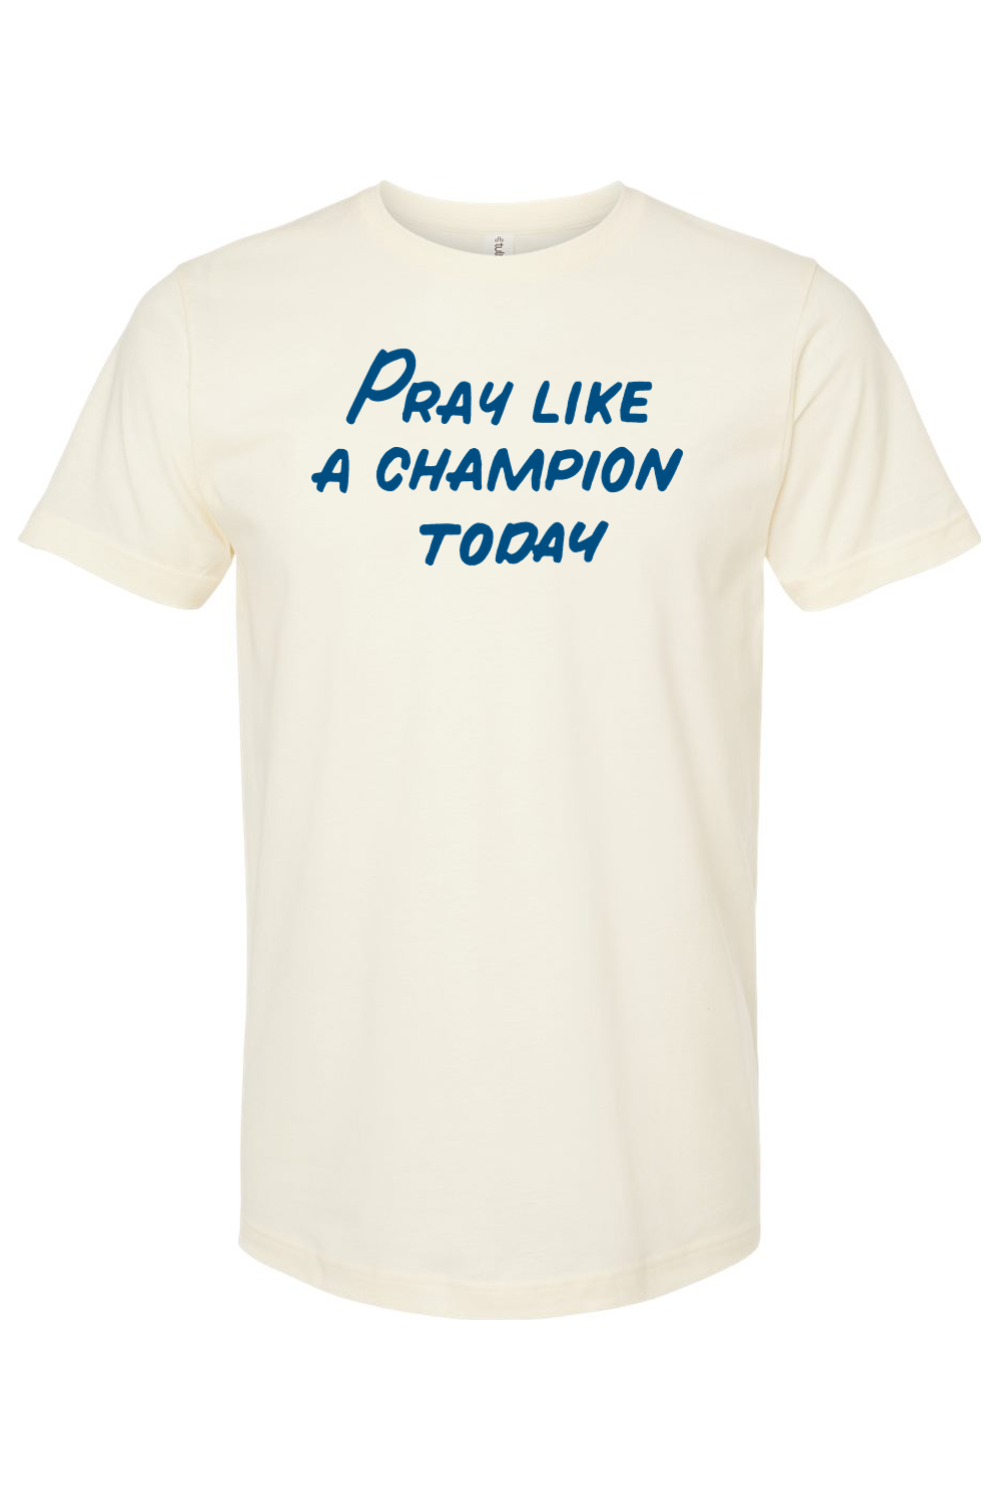 Pray Like a Champion Today - T-Shirt